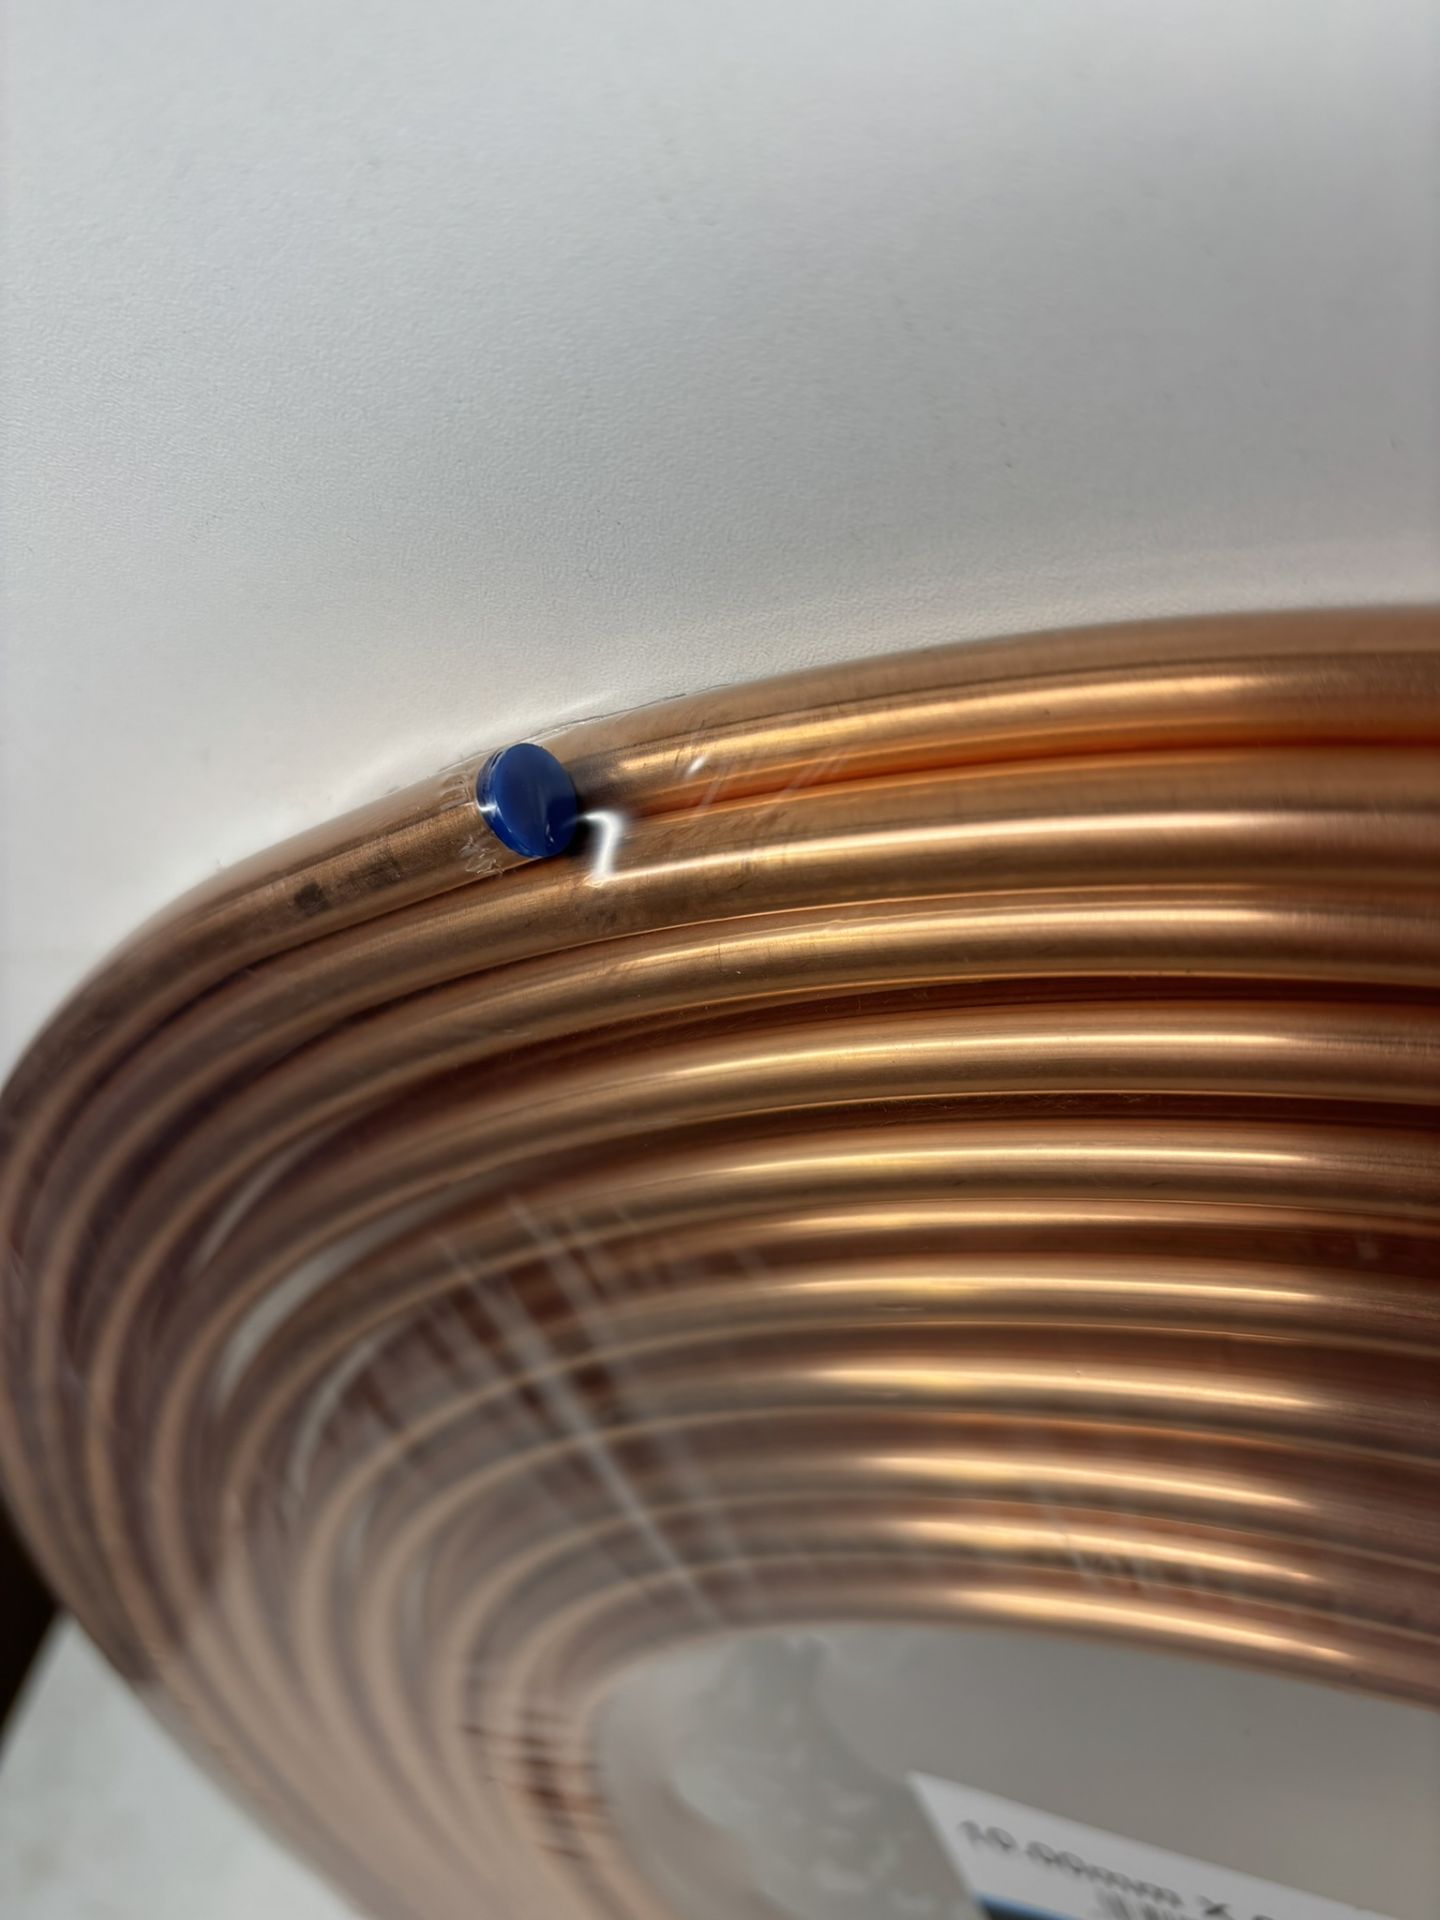 3 x Lawton 10.00mm x 0.70mm x 25Mtr Copper Plumbing Tube Coils - Image 5 of 9